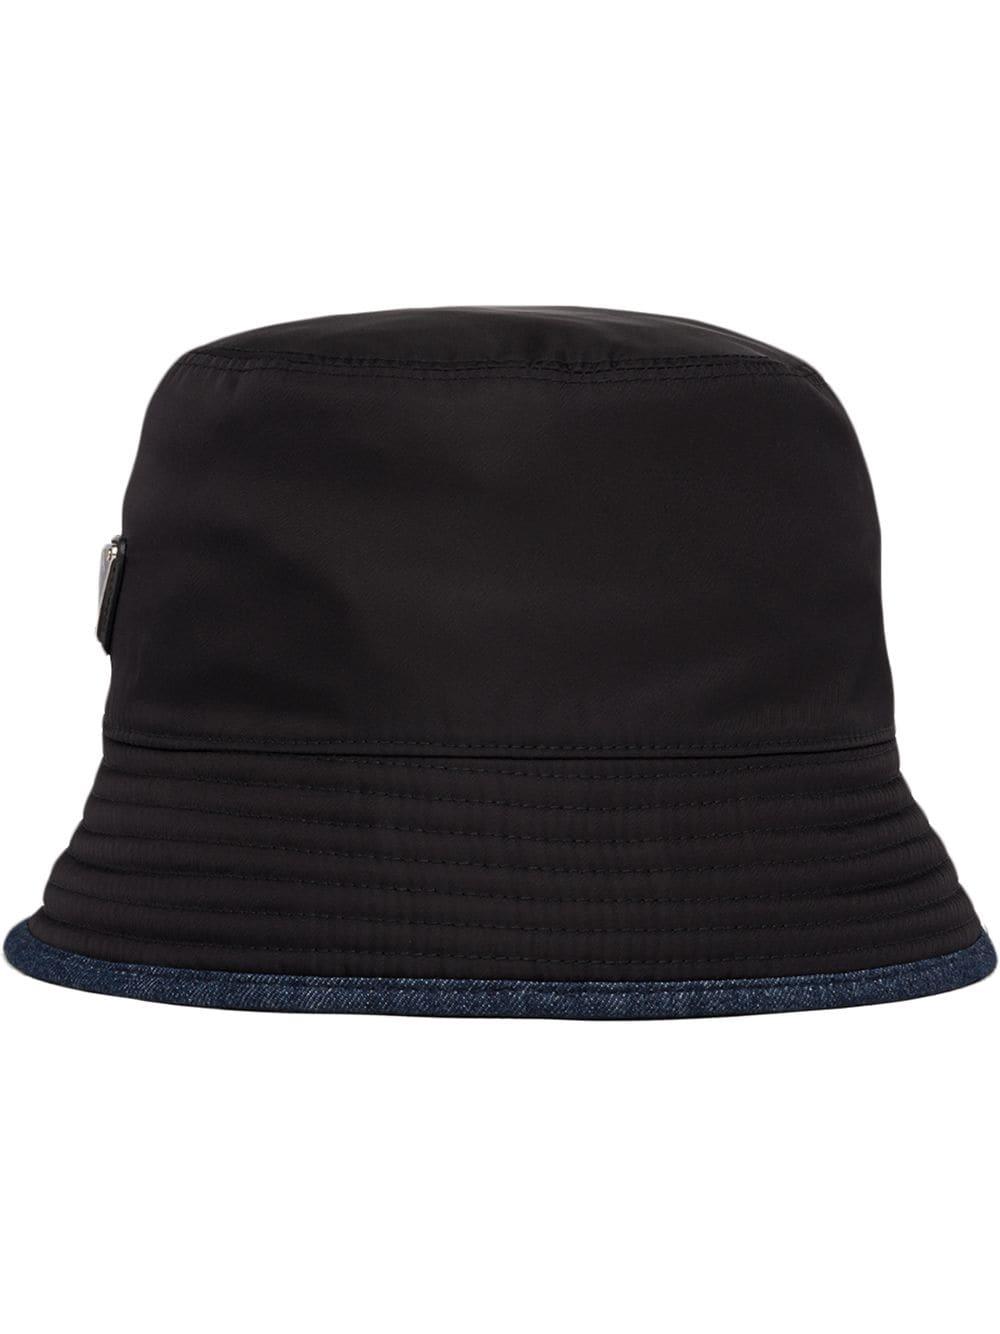 Prada Denim Reversible Bucket Hat in Black - Lyst